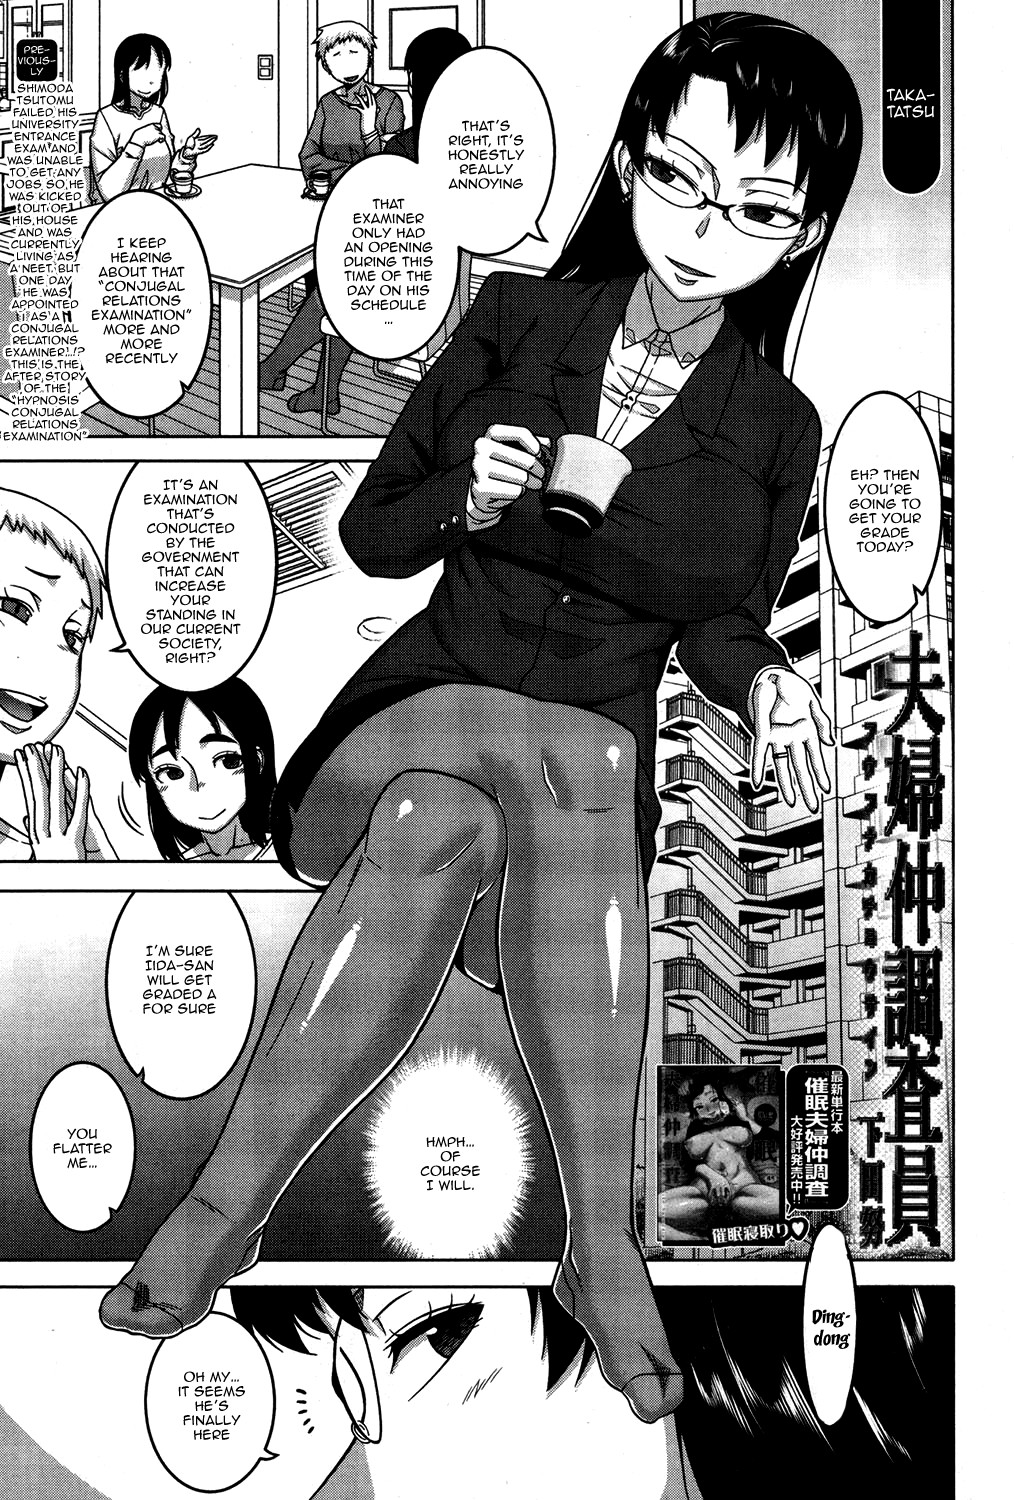 Hentai Manga Comic-Hypno Couple Relations Examination Continuation-Read-1